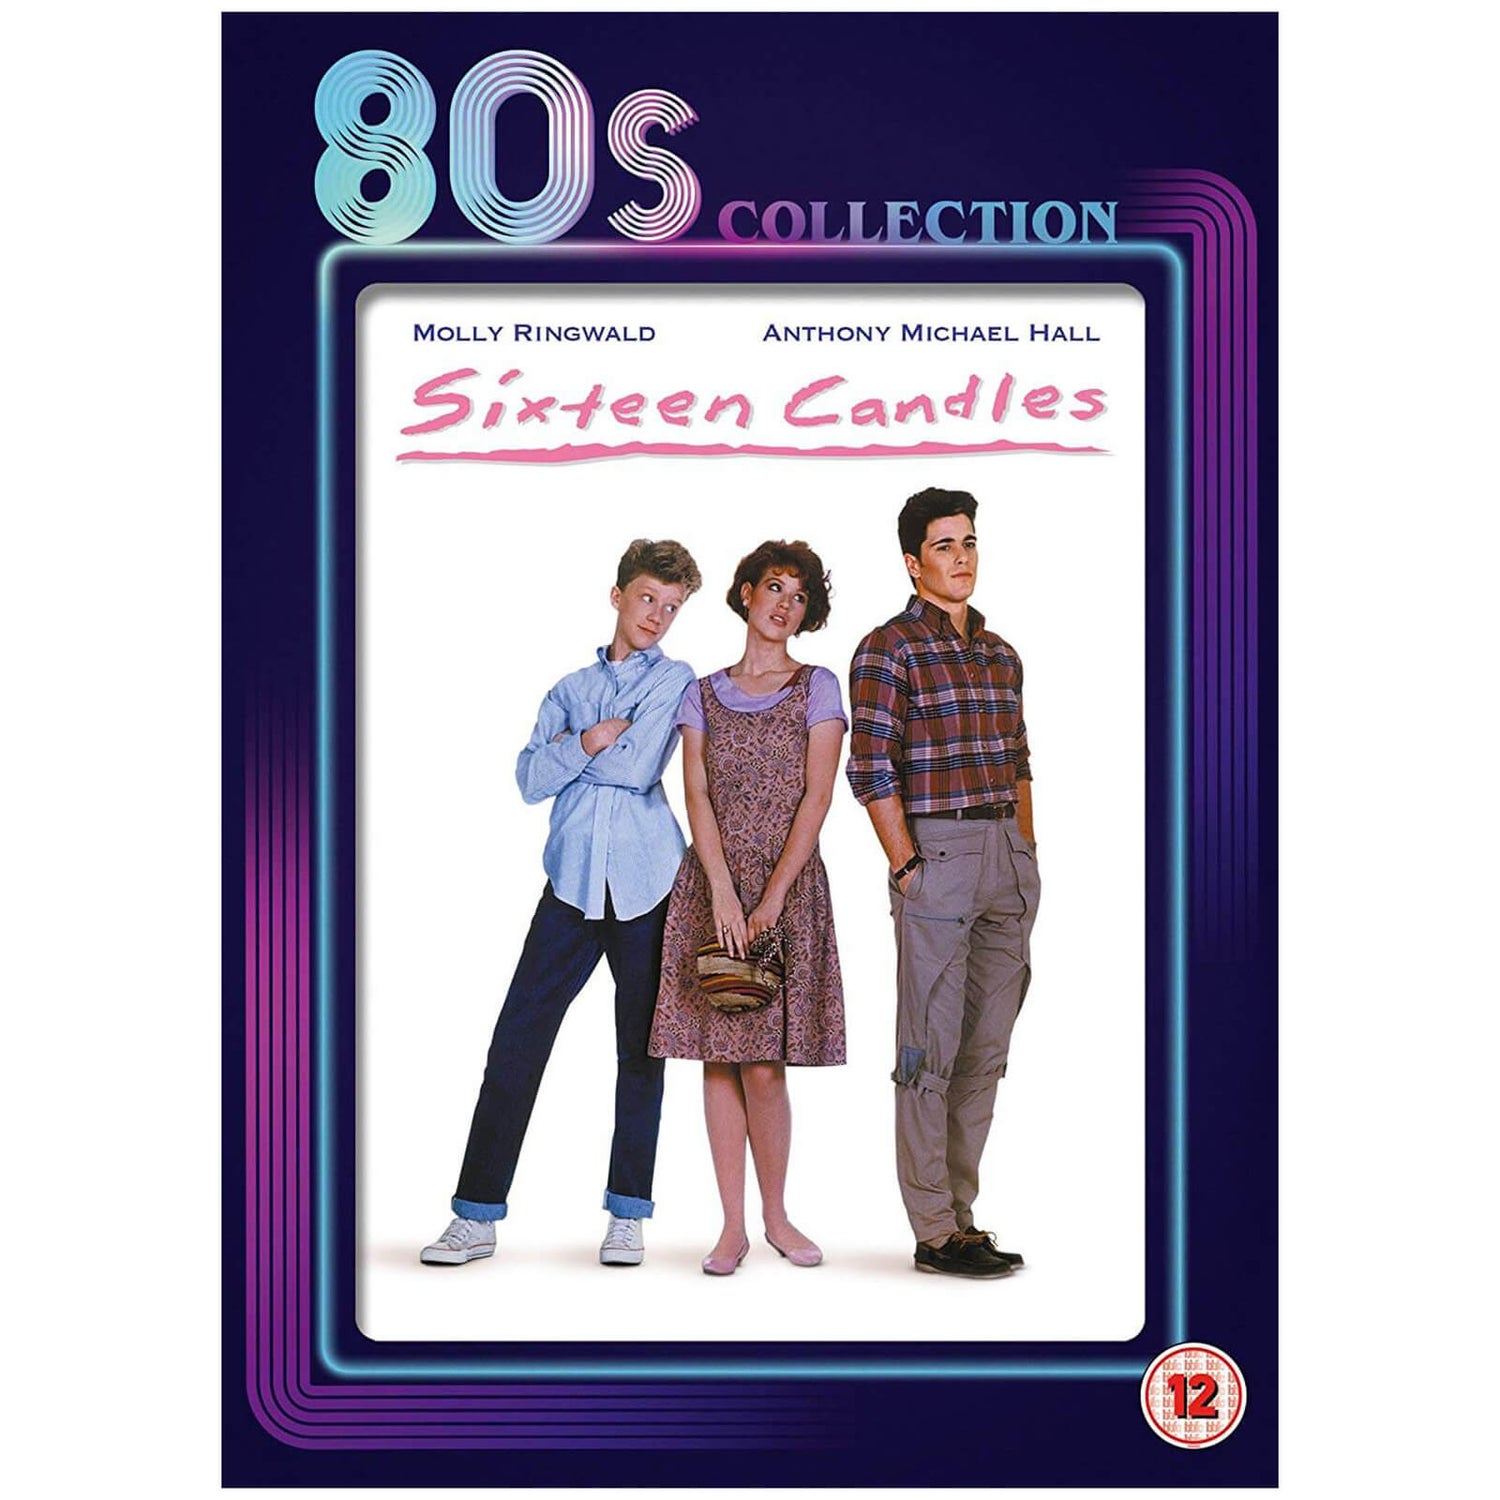 Sixteen Candles - Collection des années 80